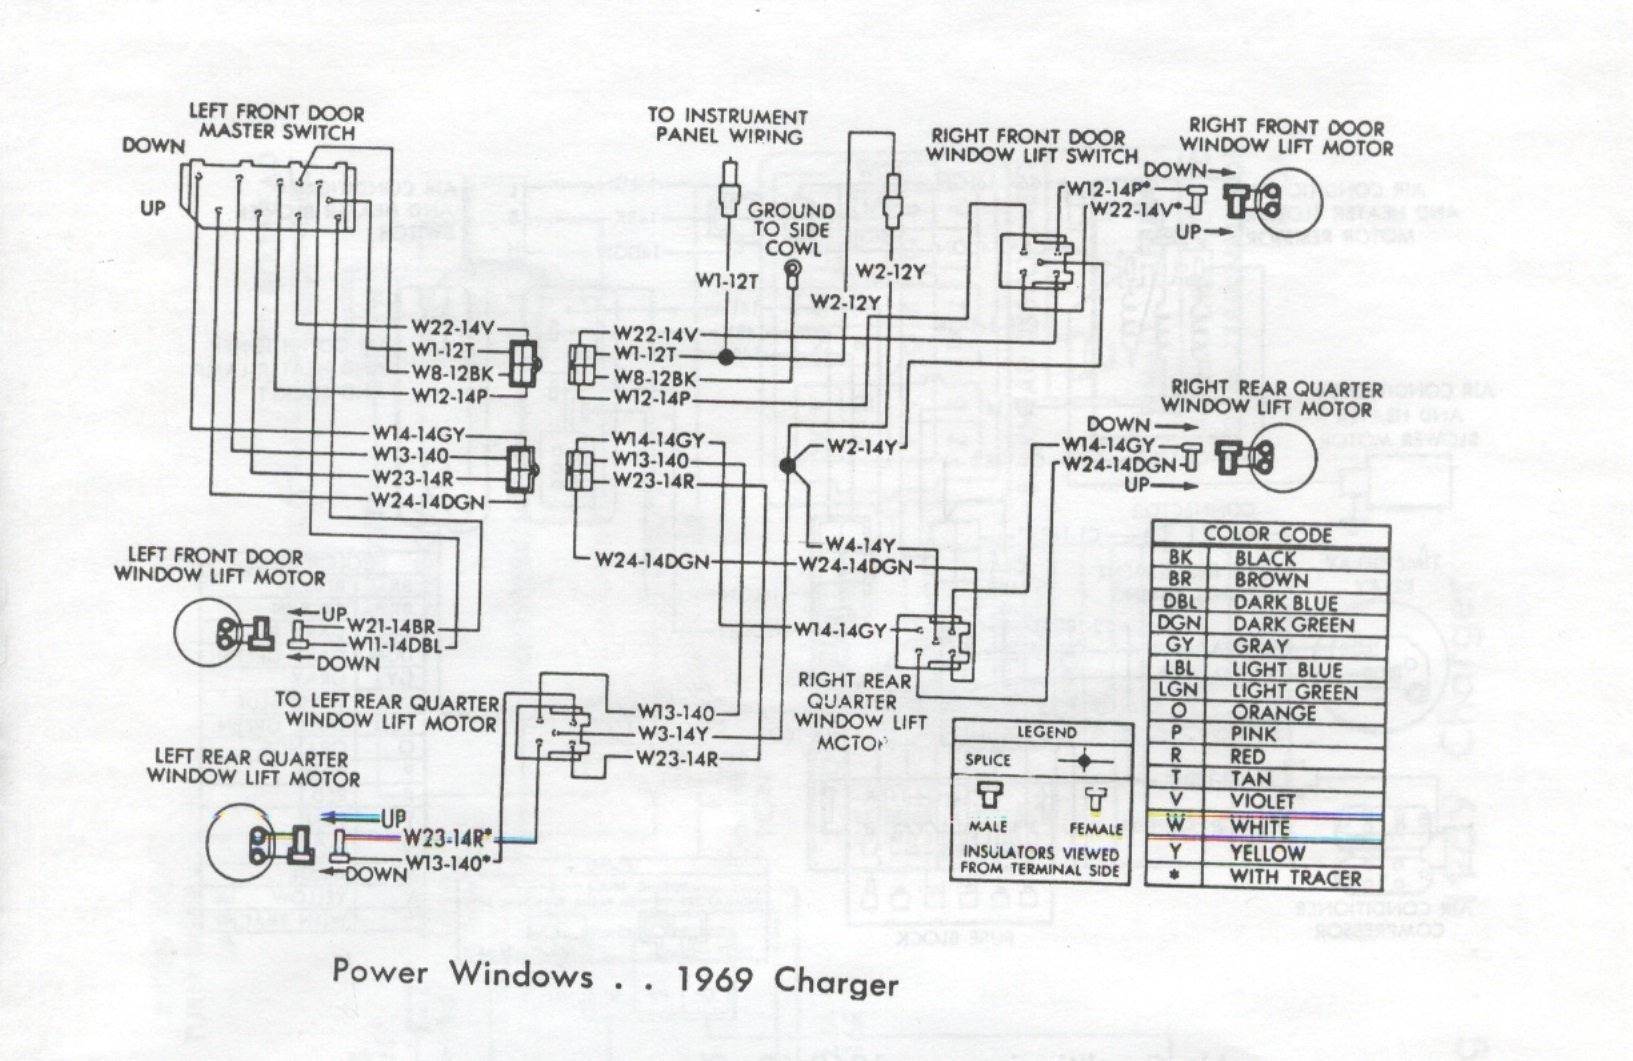 Power window wiring upgrade - relays  1990 Dodge W30 Power Window Wiring Diagram    DodgeCharger.com